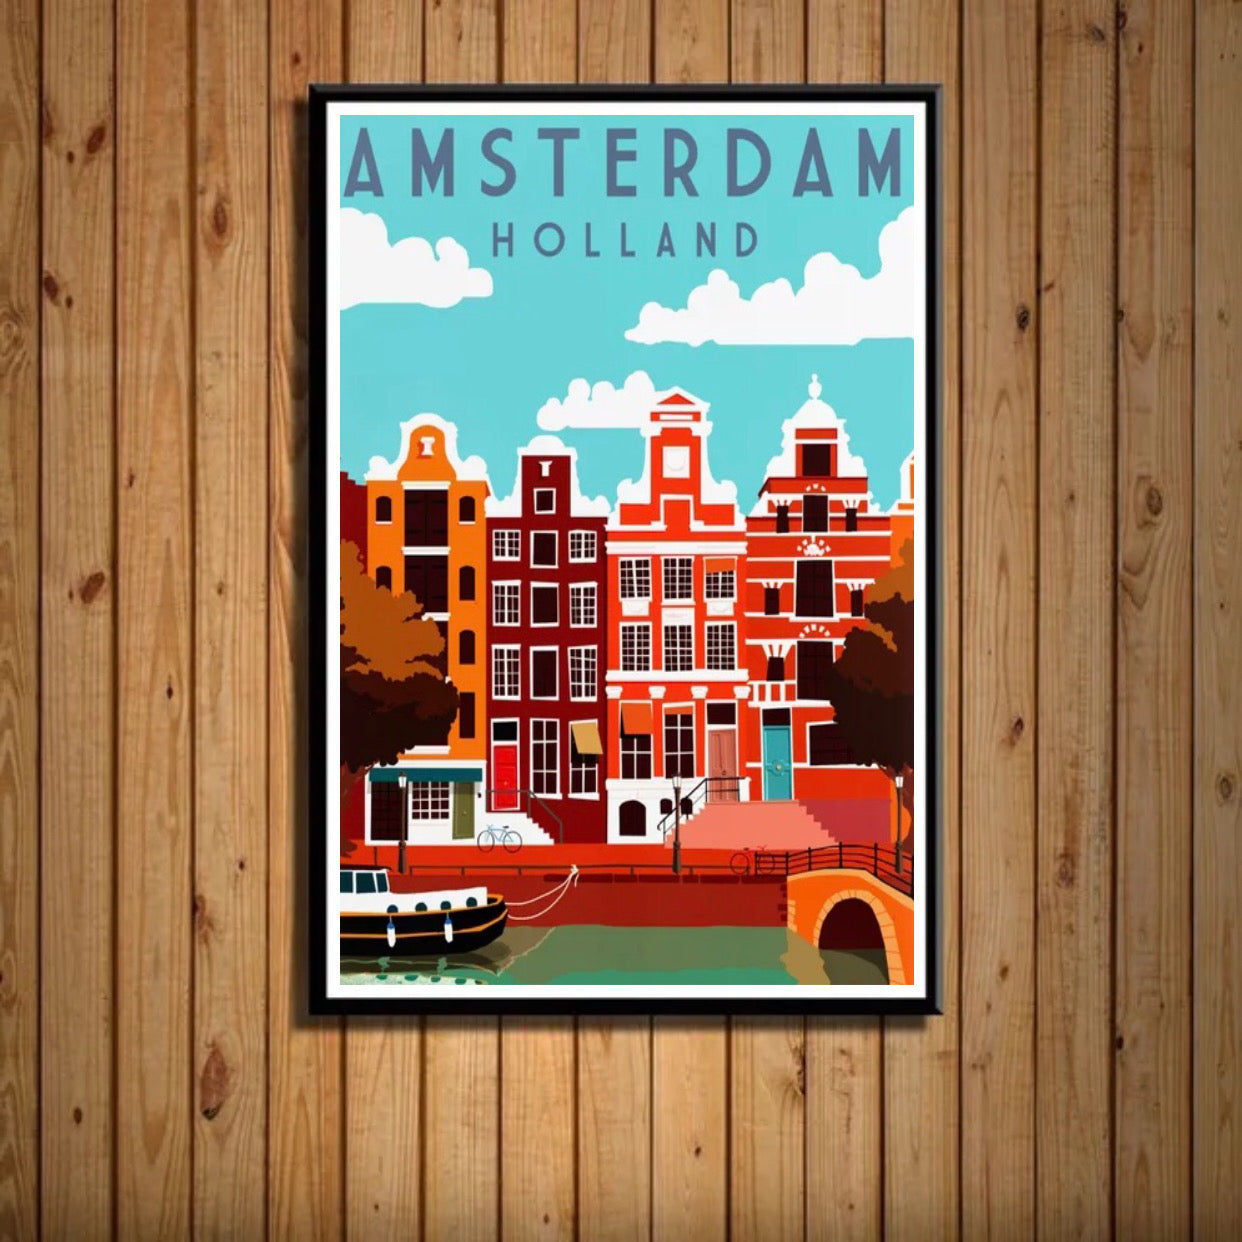 "amsterdam, holland poster